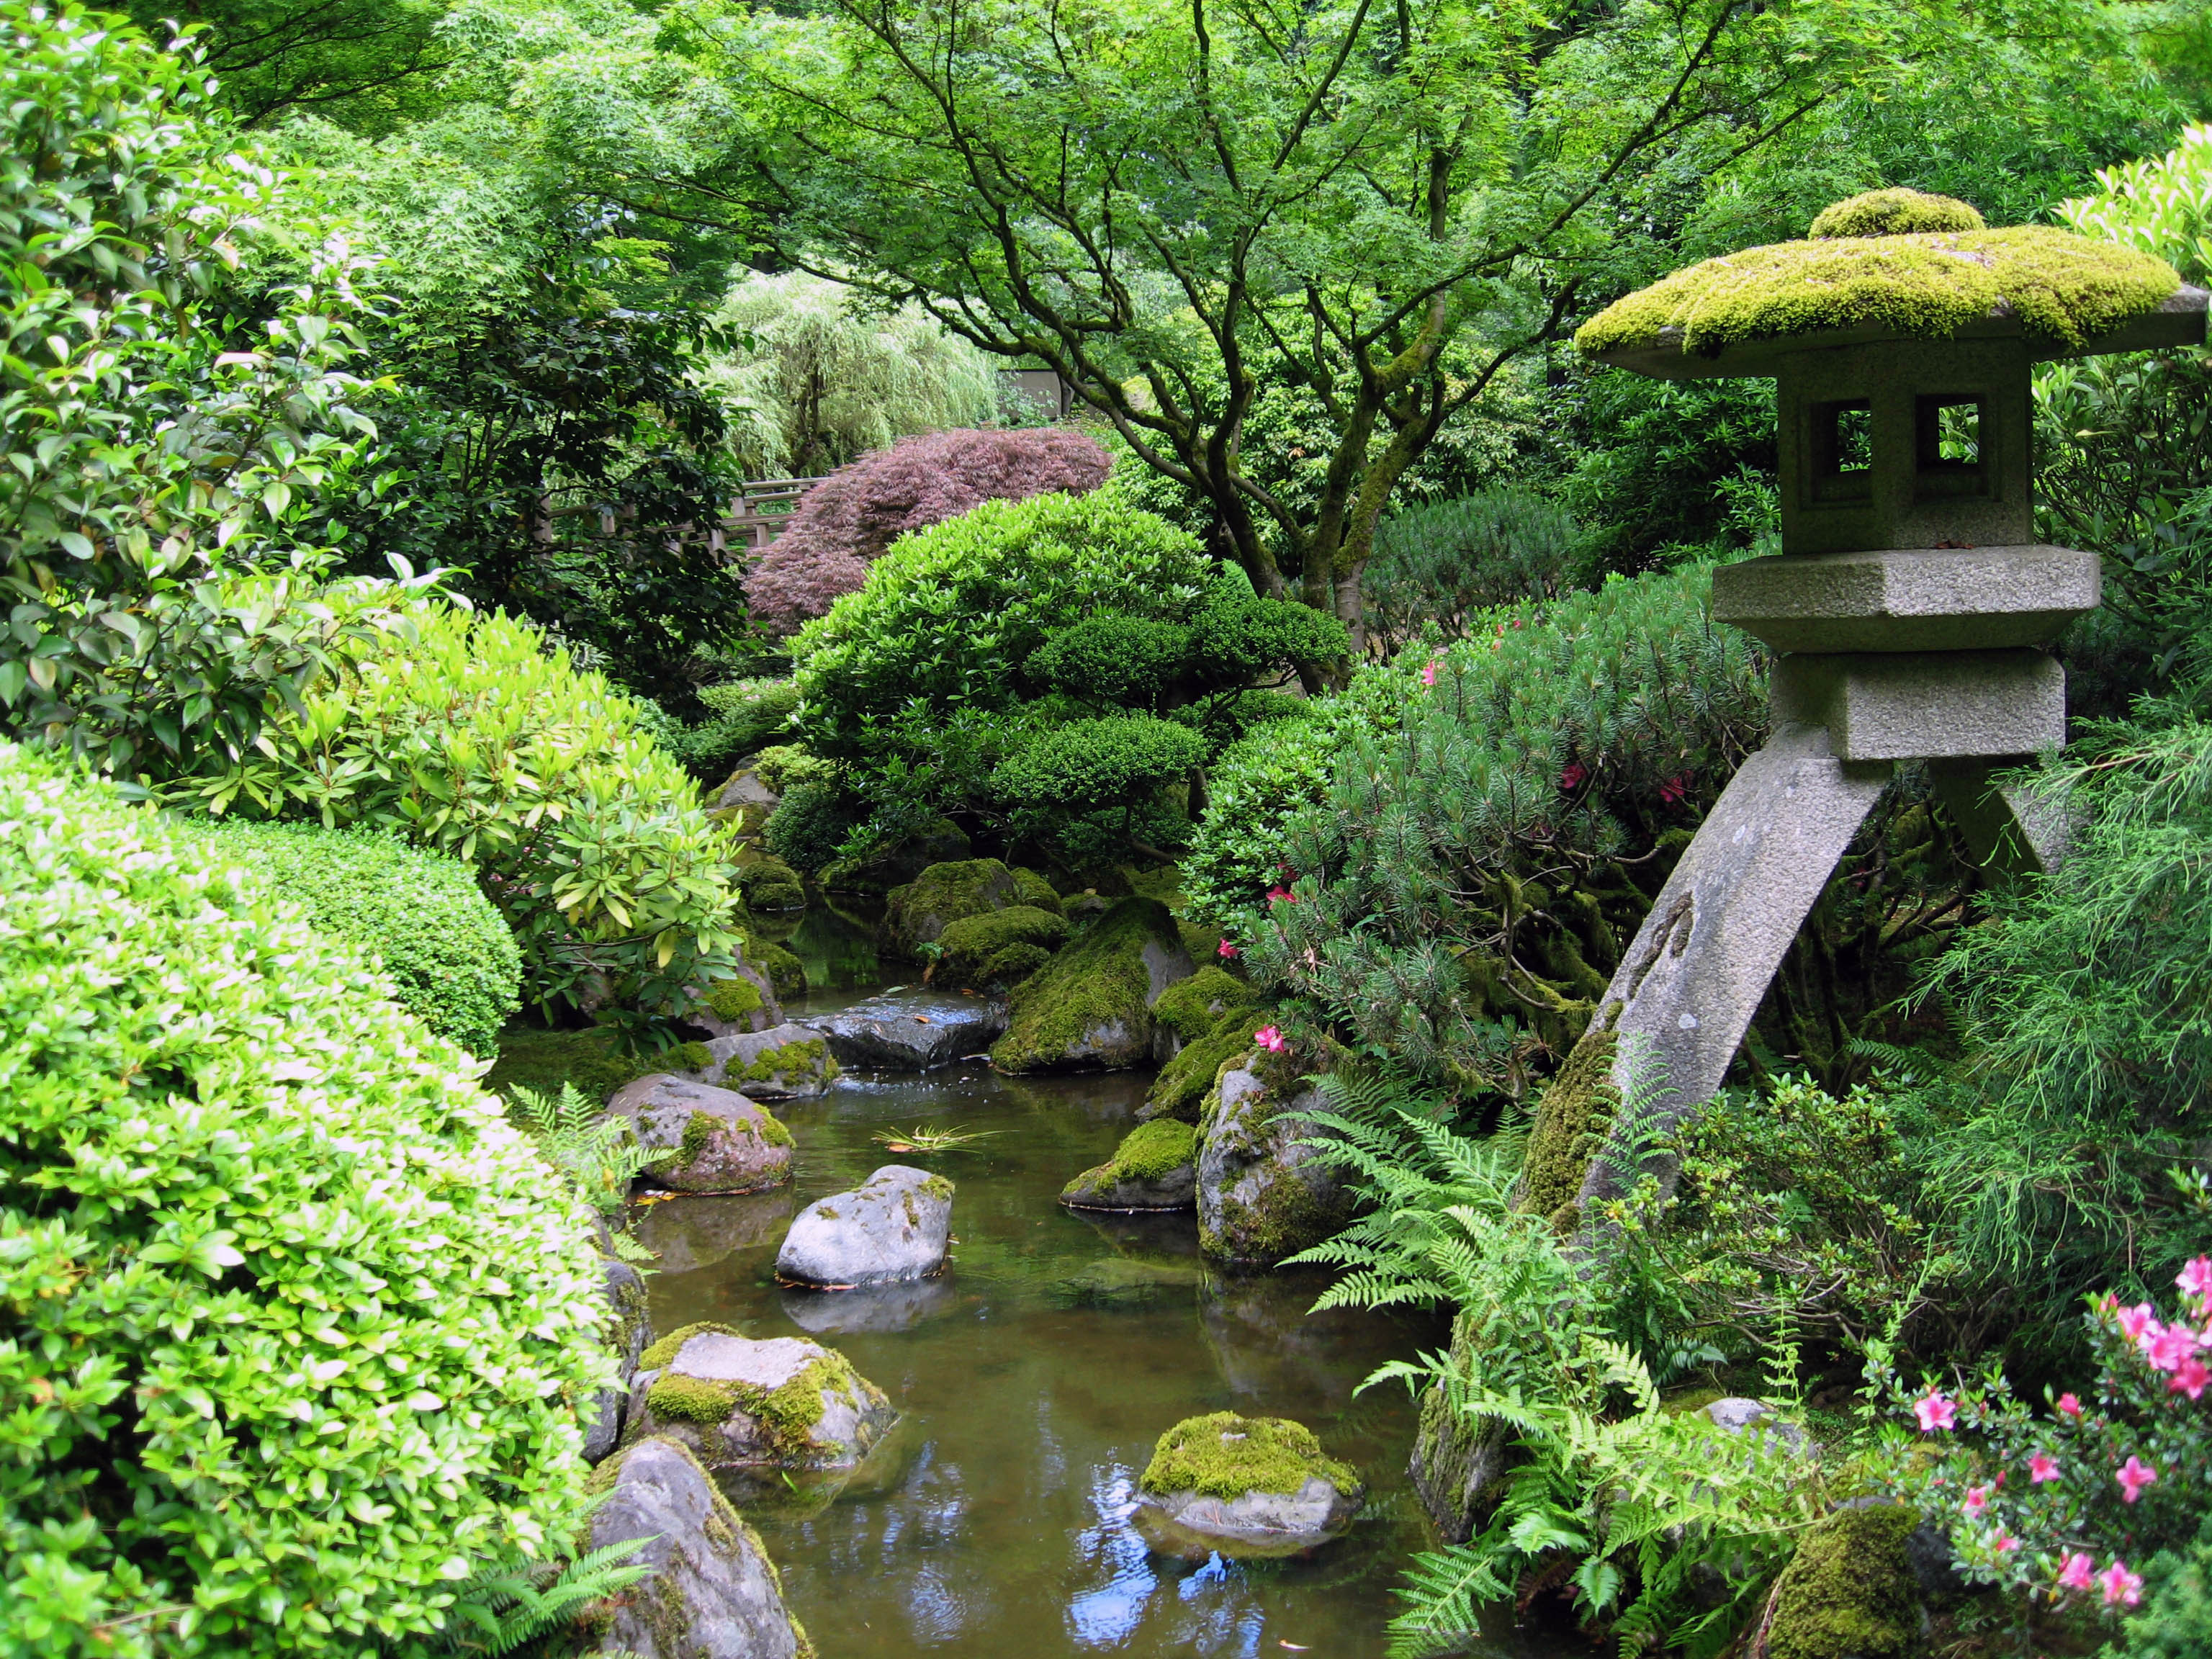 Japanese Garden Landscape Ideas